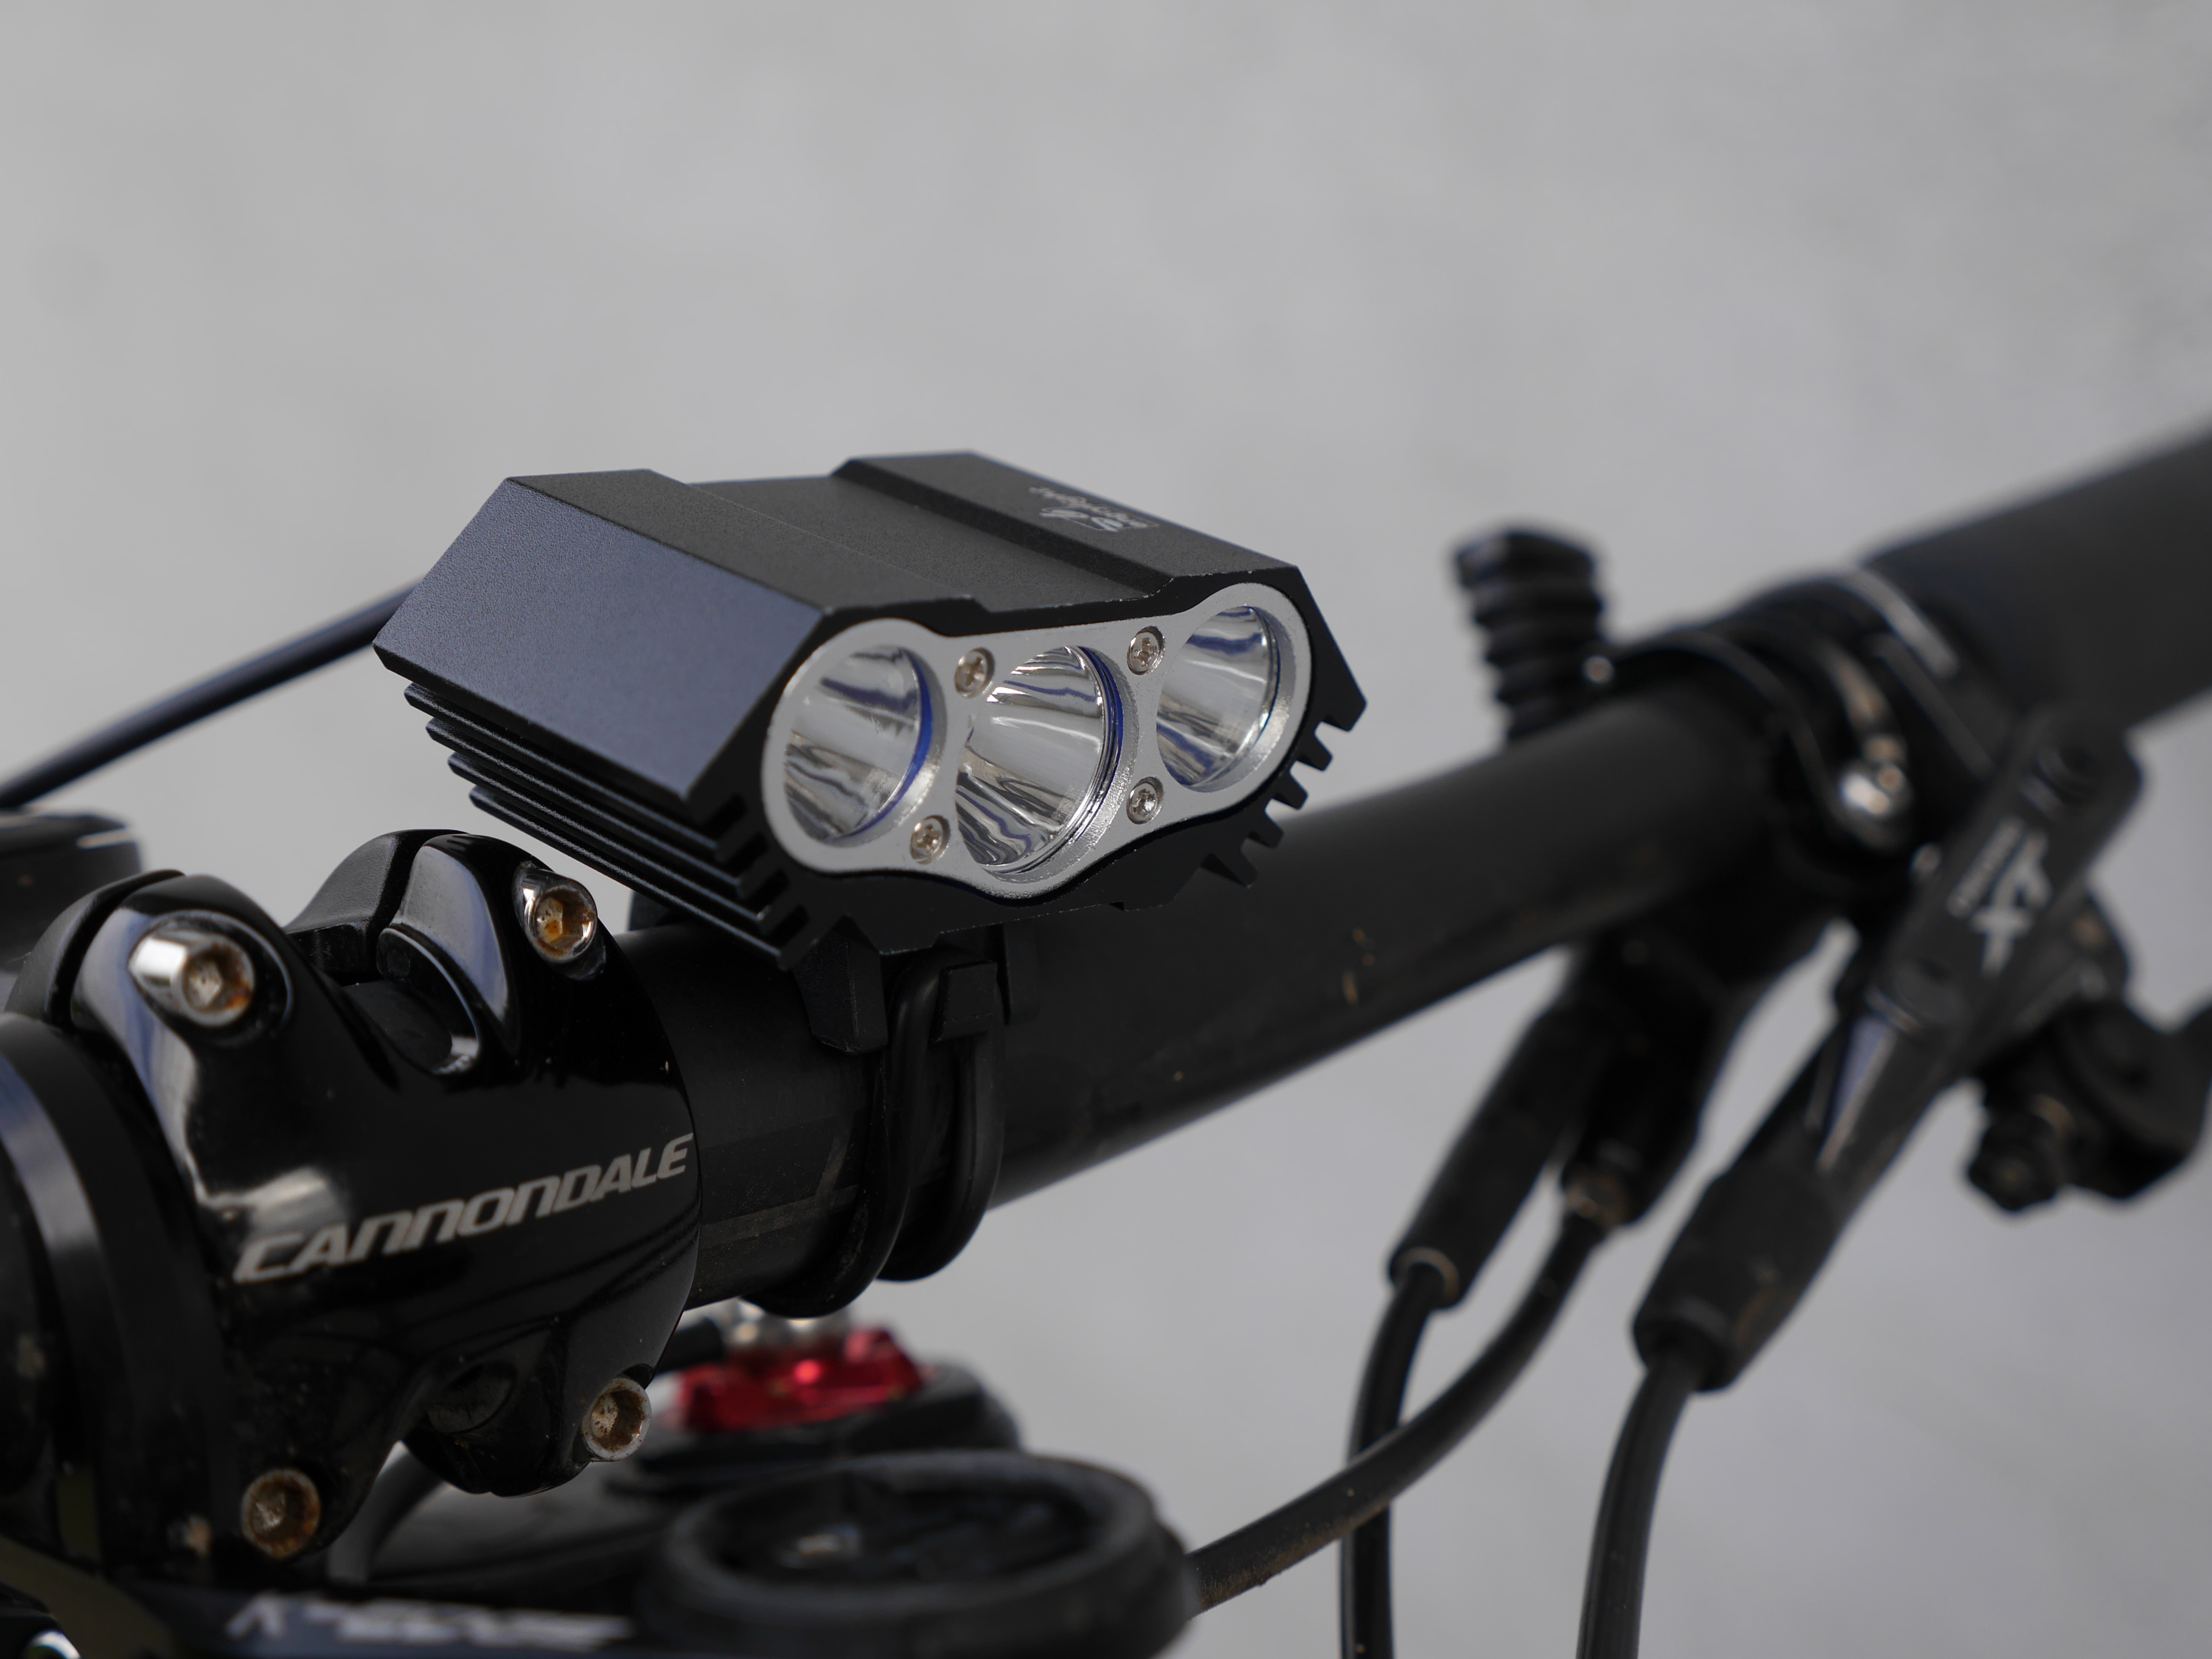 Test: Angry Light 3000 lumen | CykelStart.dk